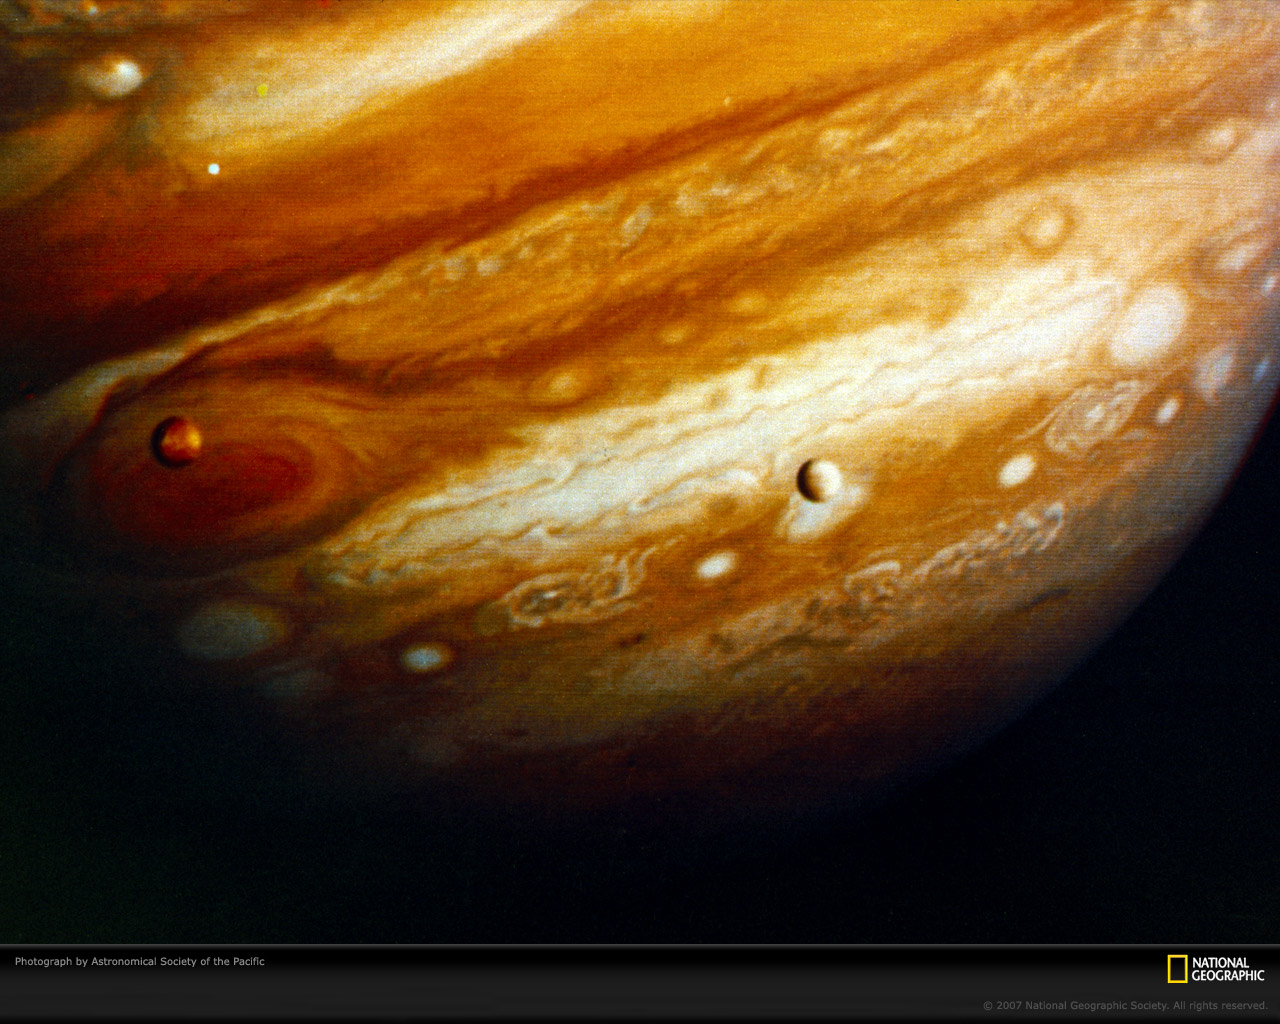  Jupiter and Moons Desktop Wallpaper Free Wallpapers Download